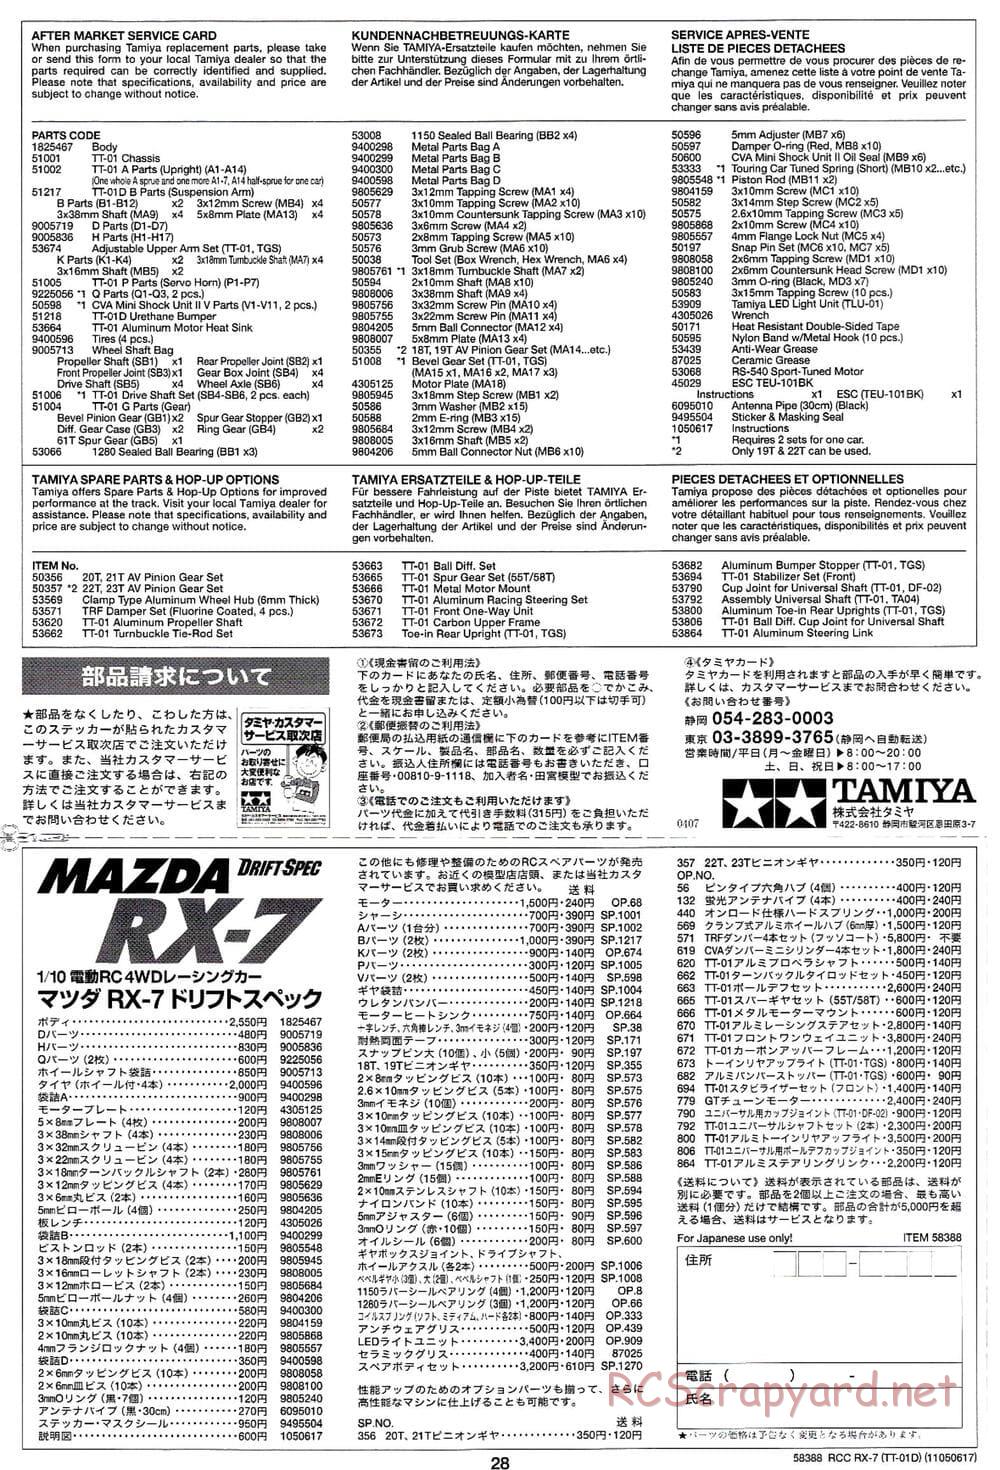 Tamiya - Mazda RX-7 - Drift Spec - TT-01D Chassis - Manual - Page 28